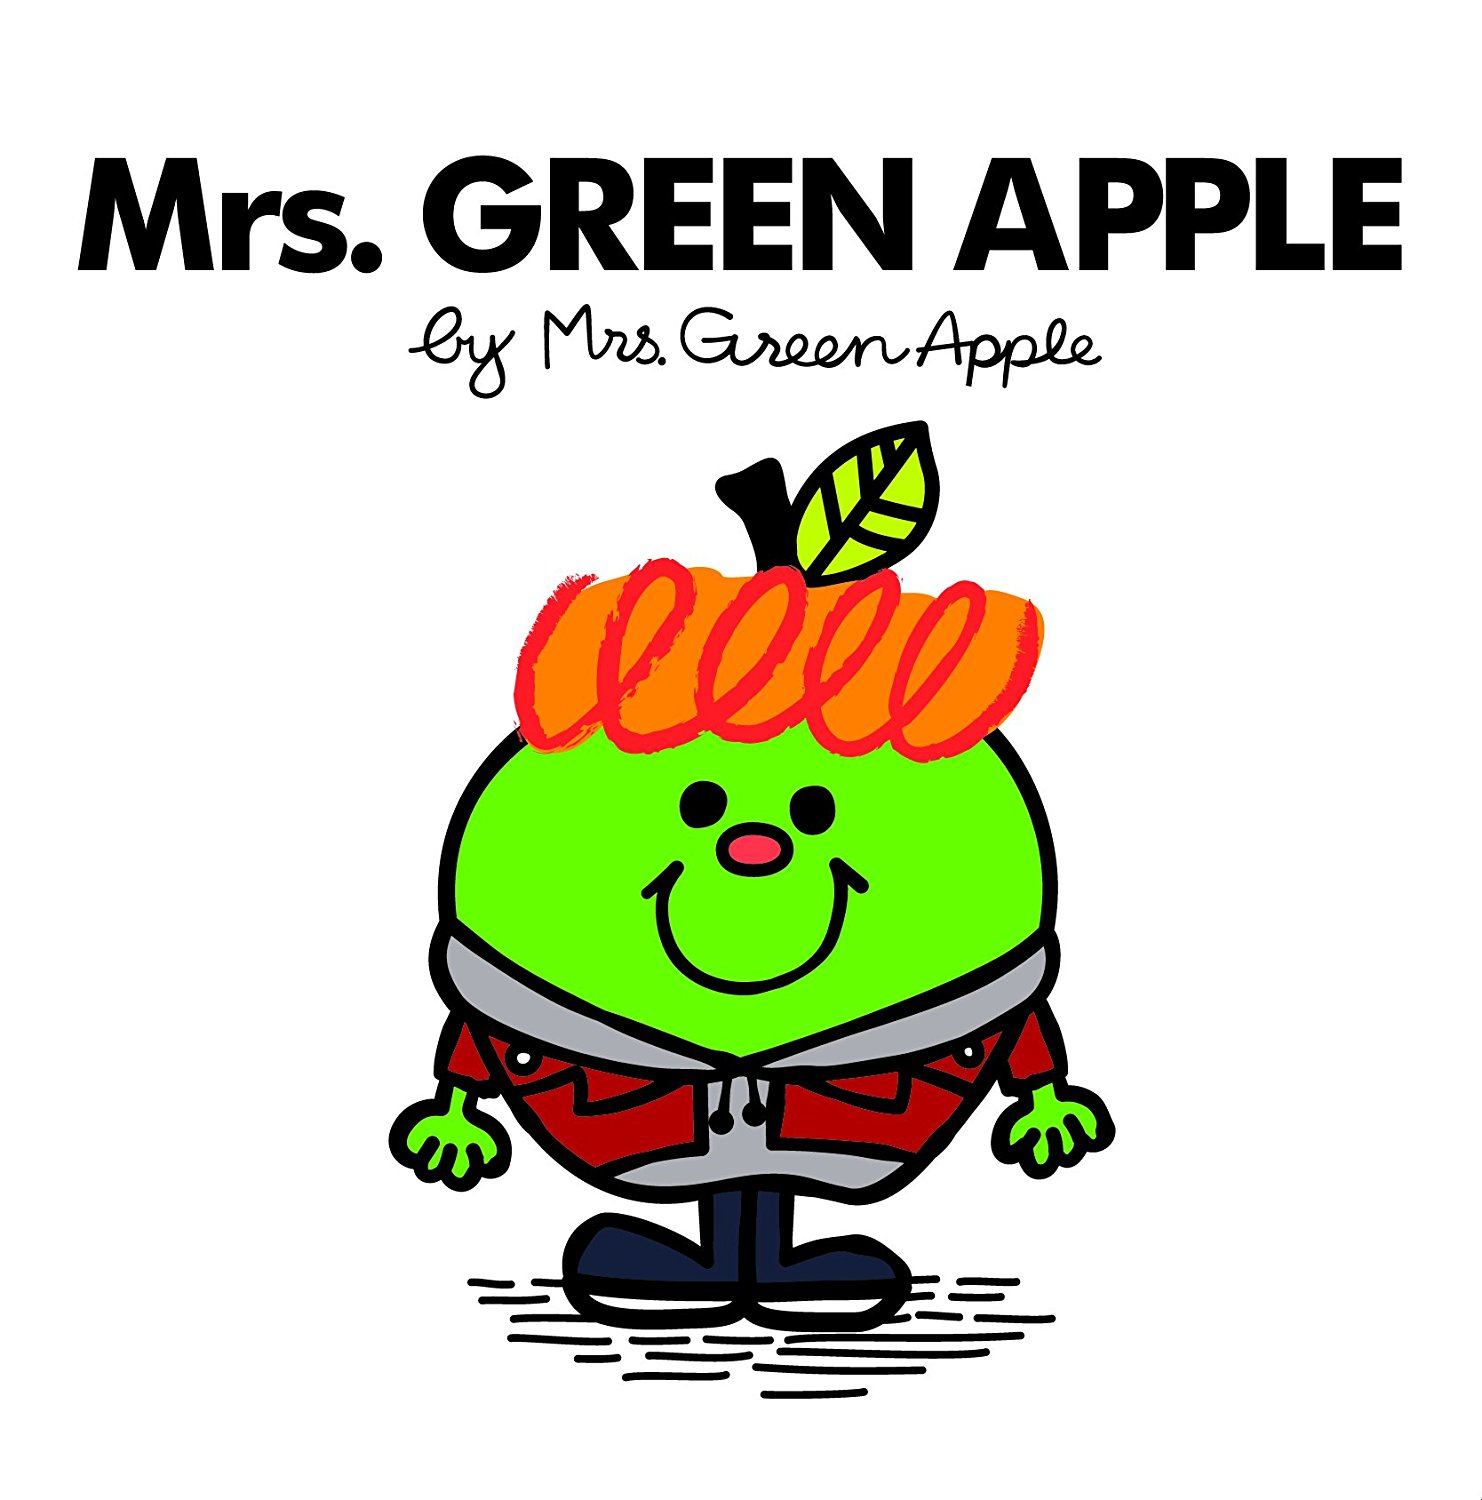 Green apple mrs.